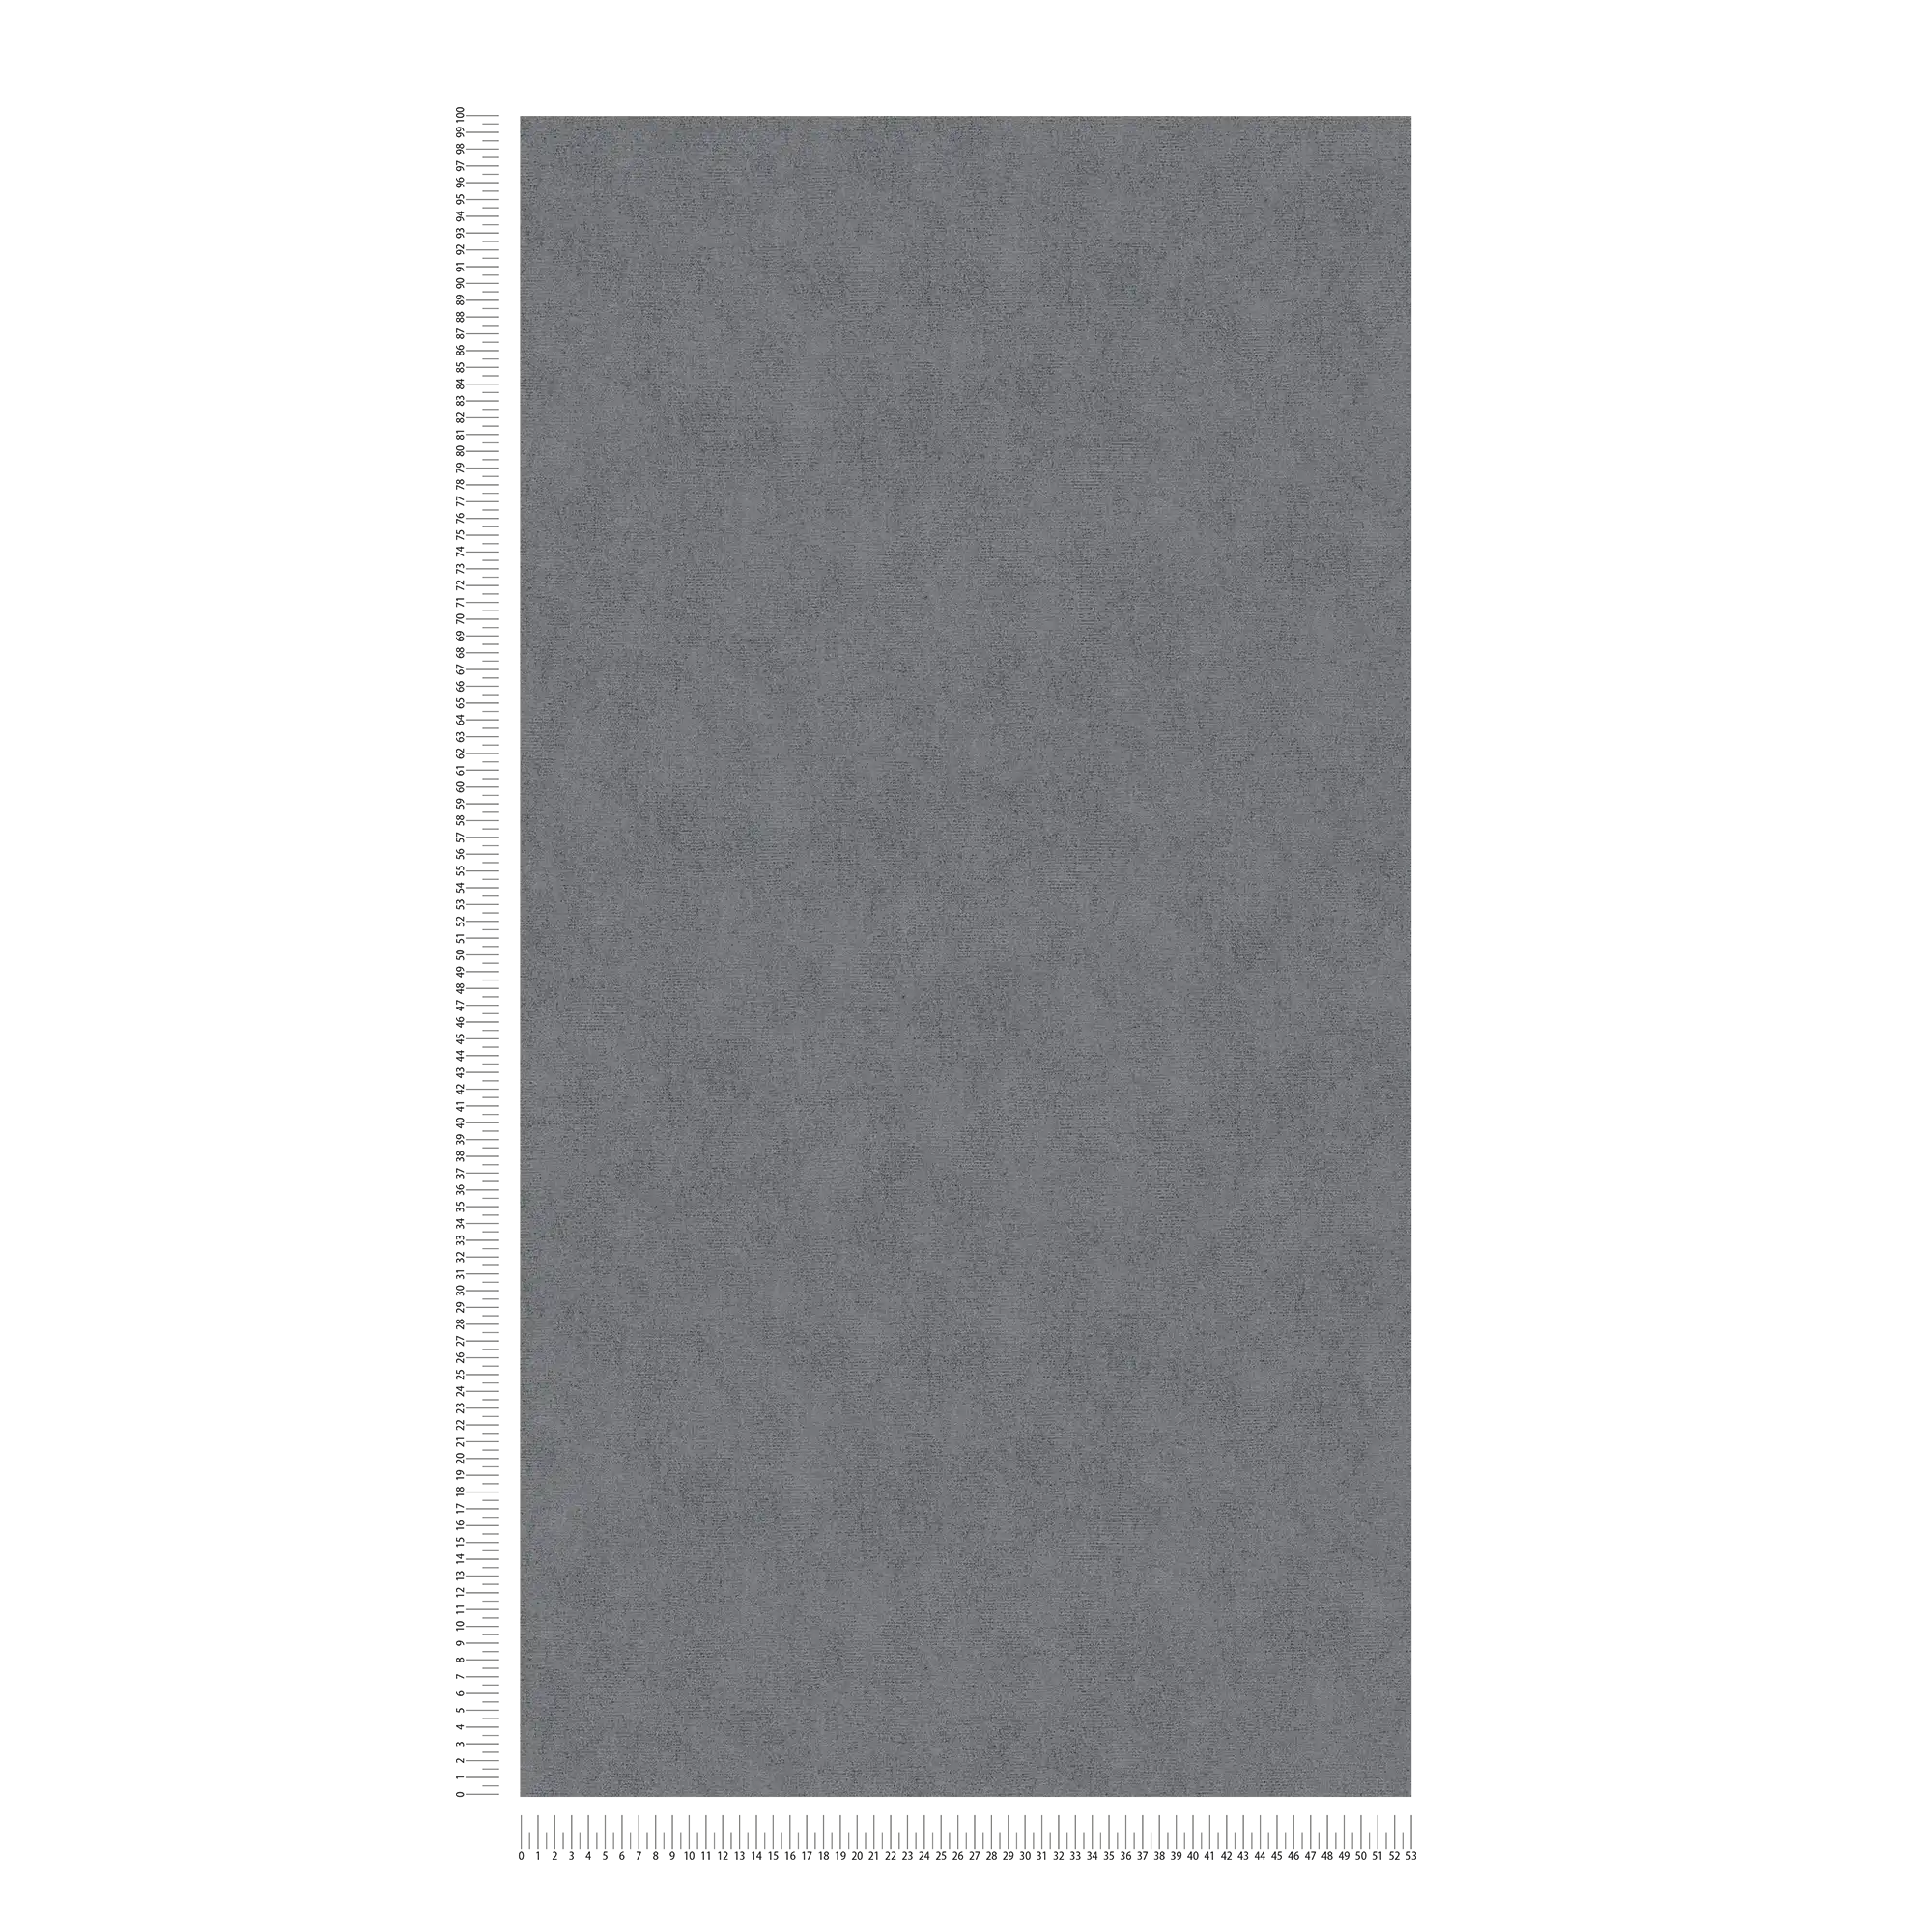             Plain wallpaper dark grey mottled with shimmer effect - grey
        